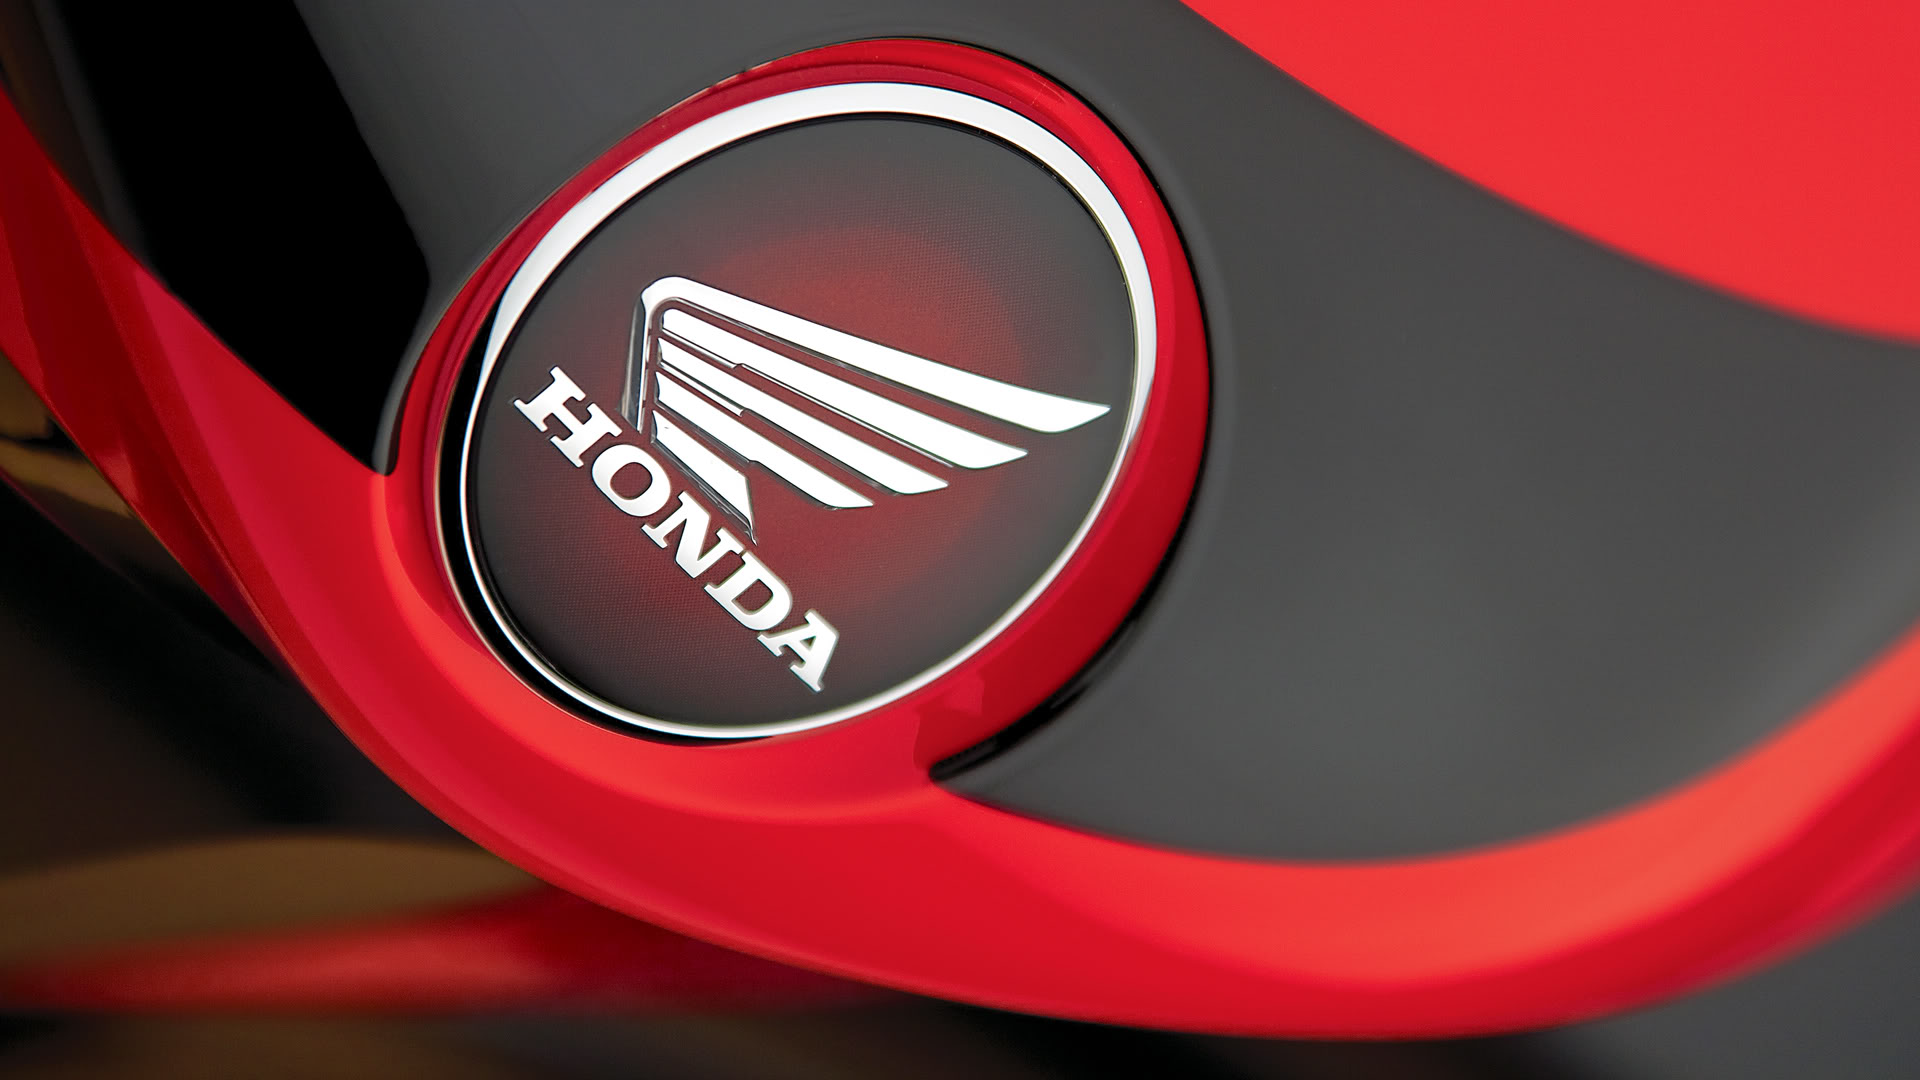 HD Honda Background Wallpaper Image For